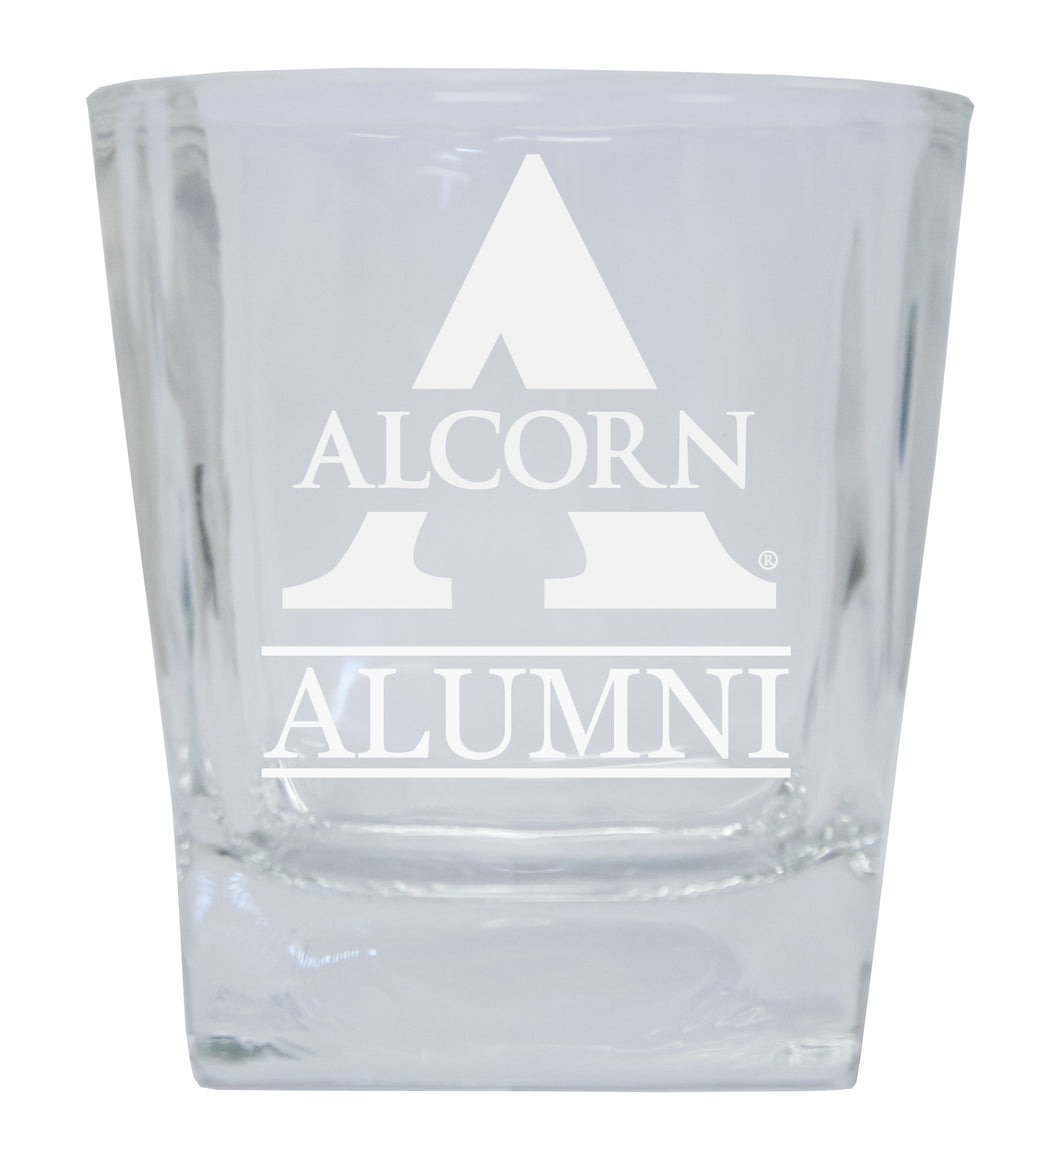 Alcorn State Braves Alumni Elegance - 5 oz Etched Shooter Glass Tumbler